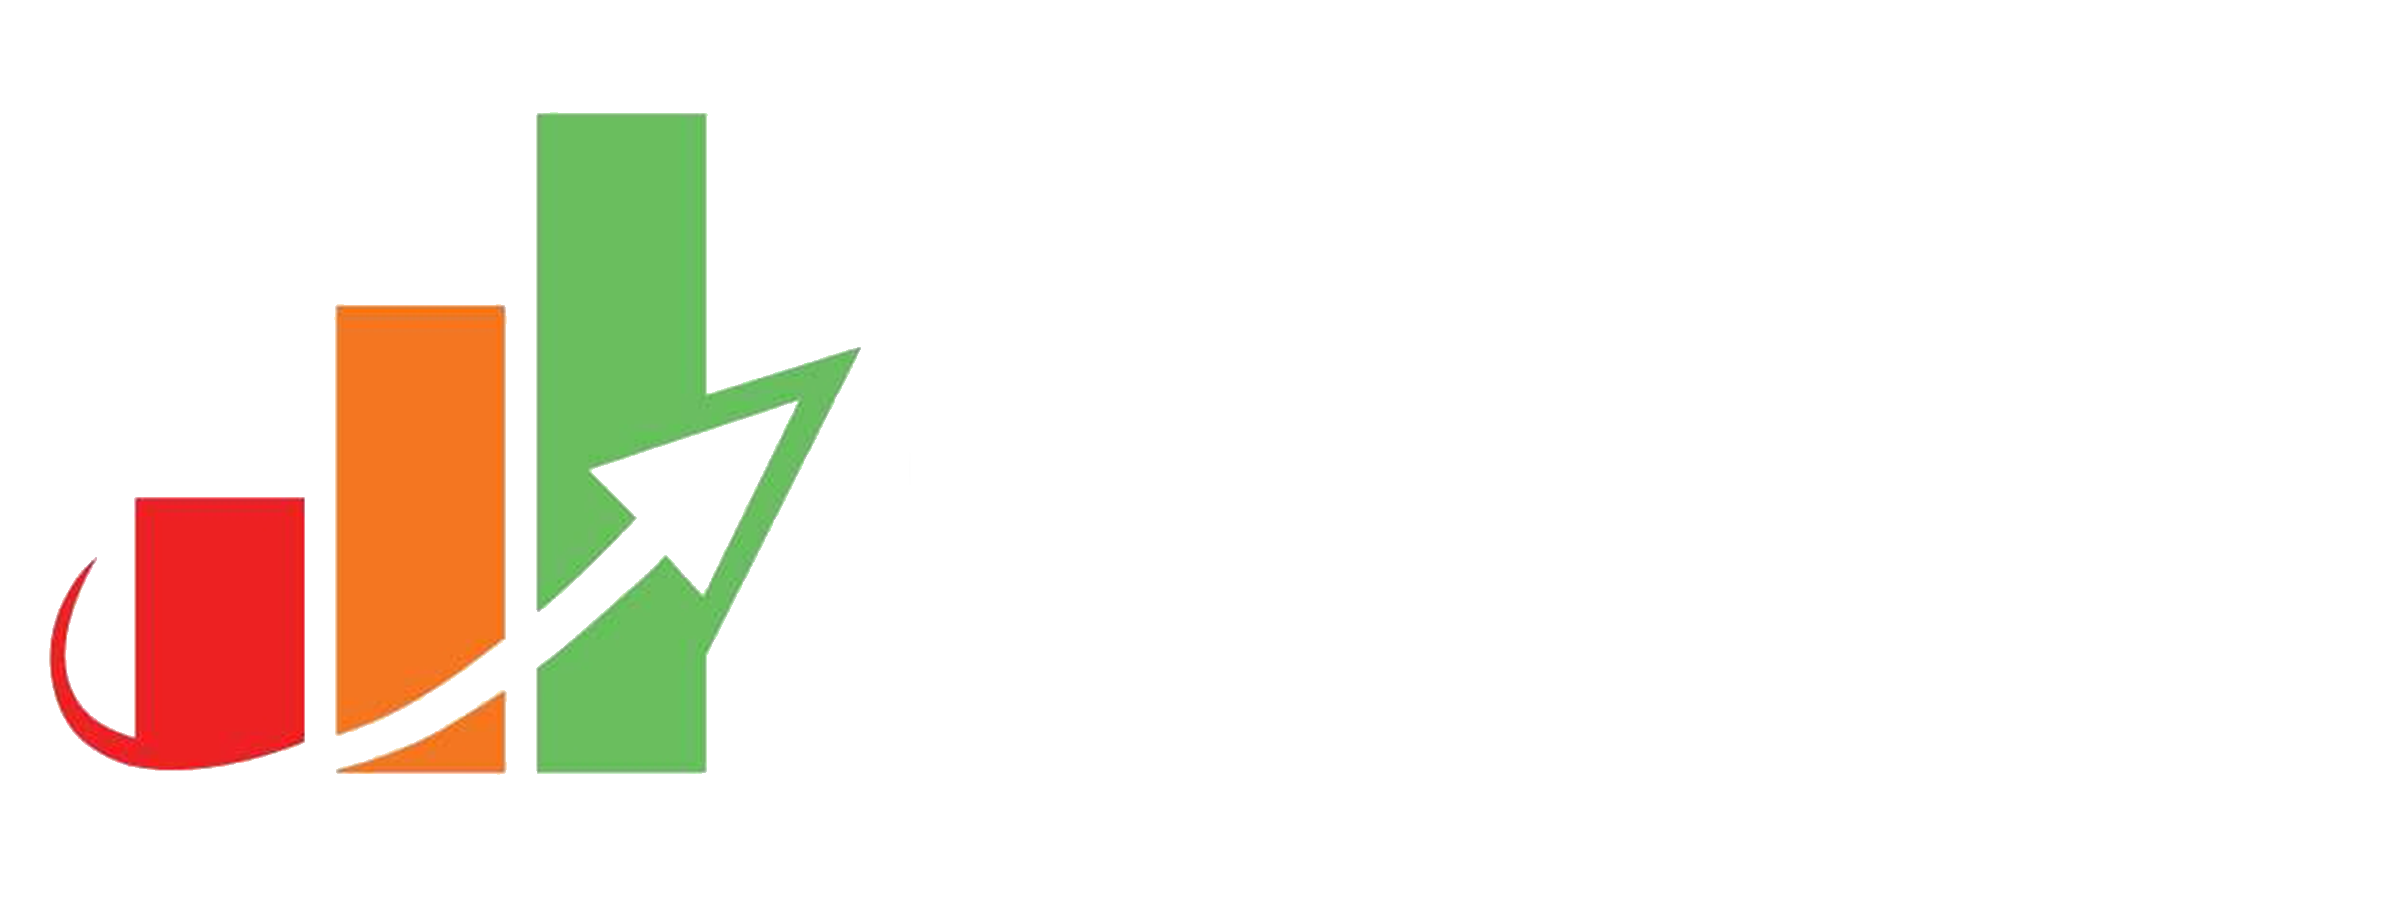 sigzy trade signal logo